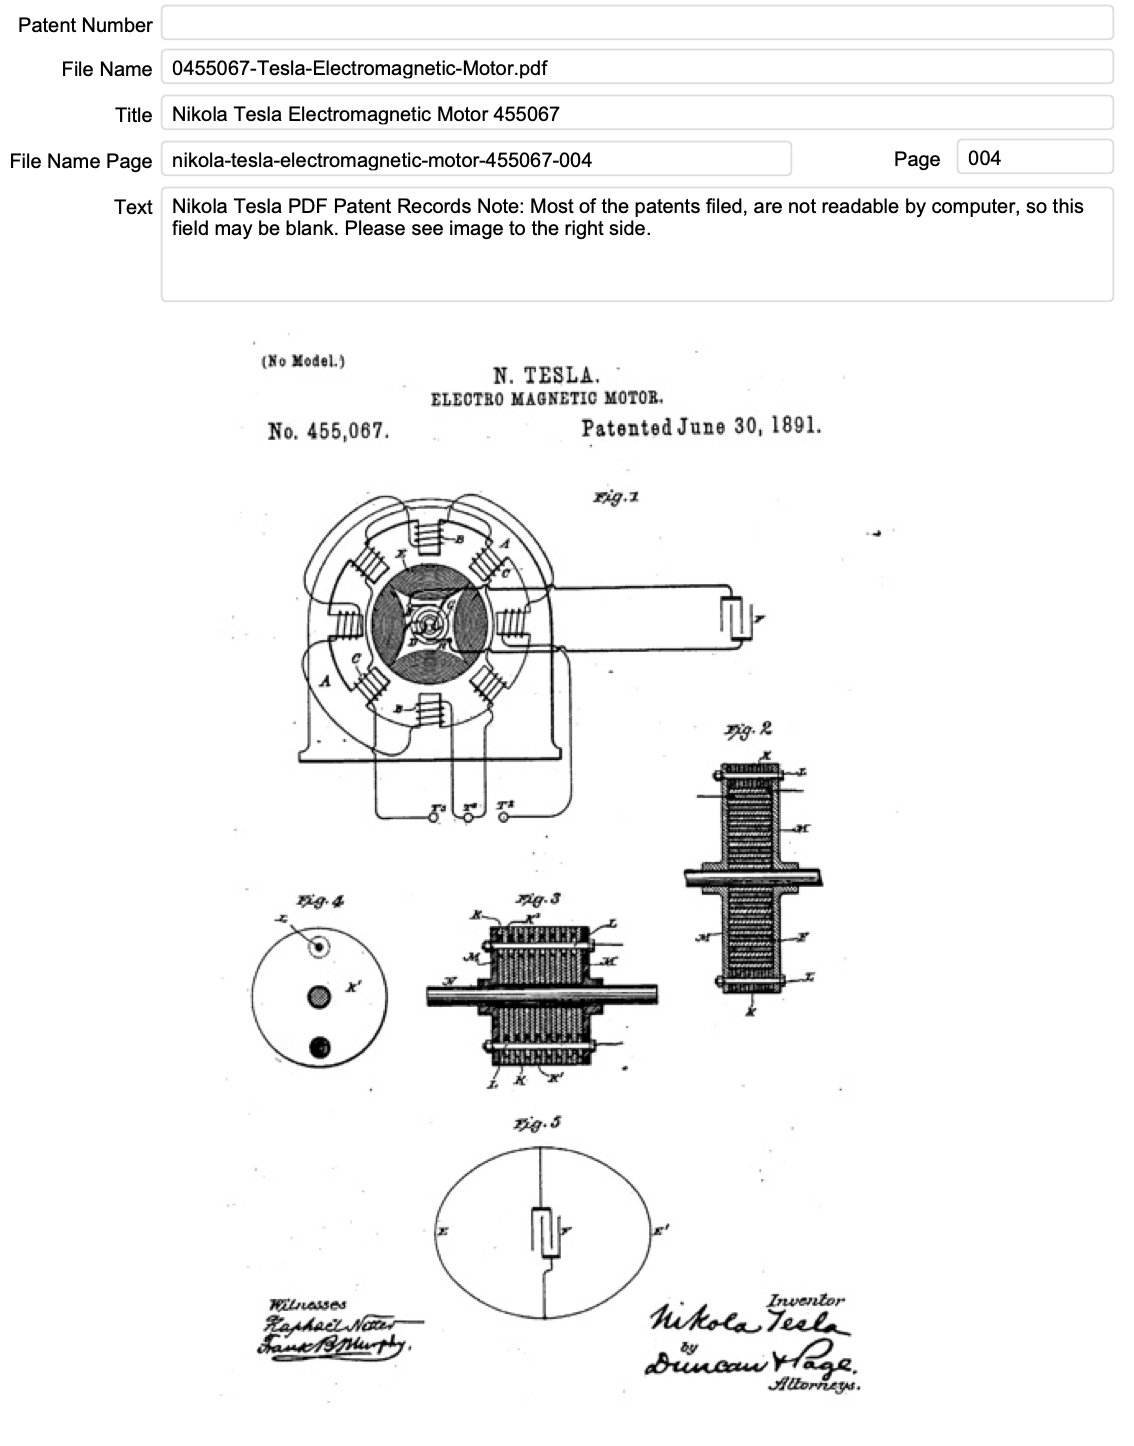 Nikola Tesla Patents Filemaker Solution 